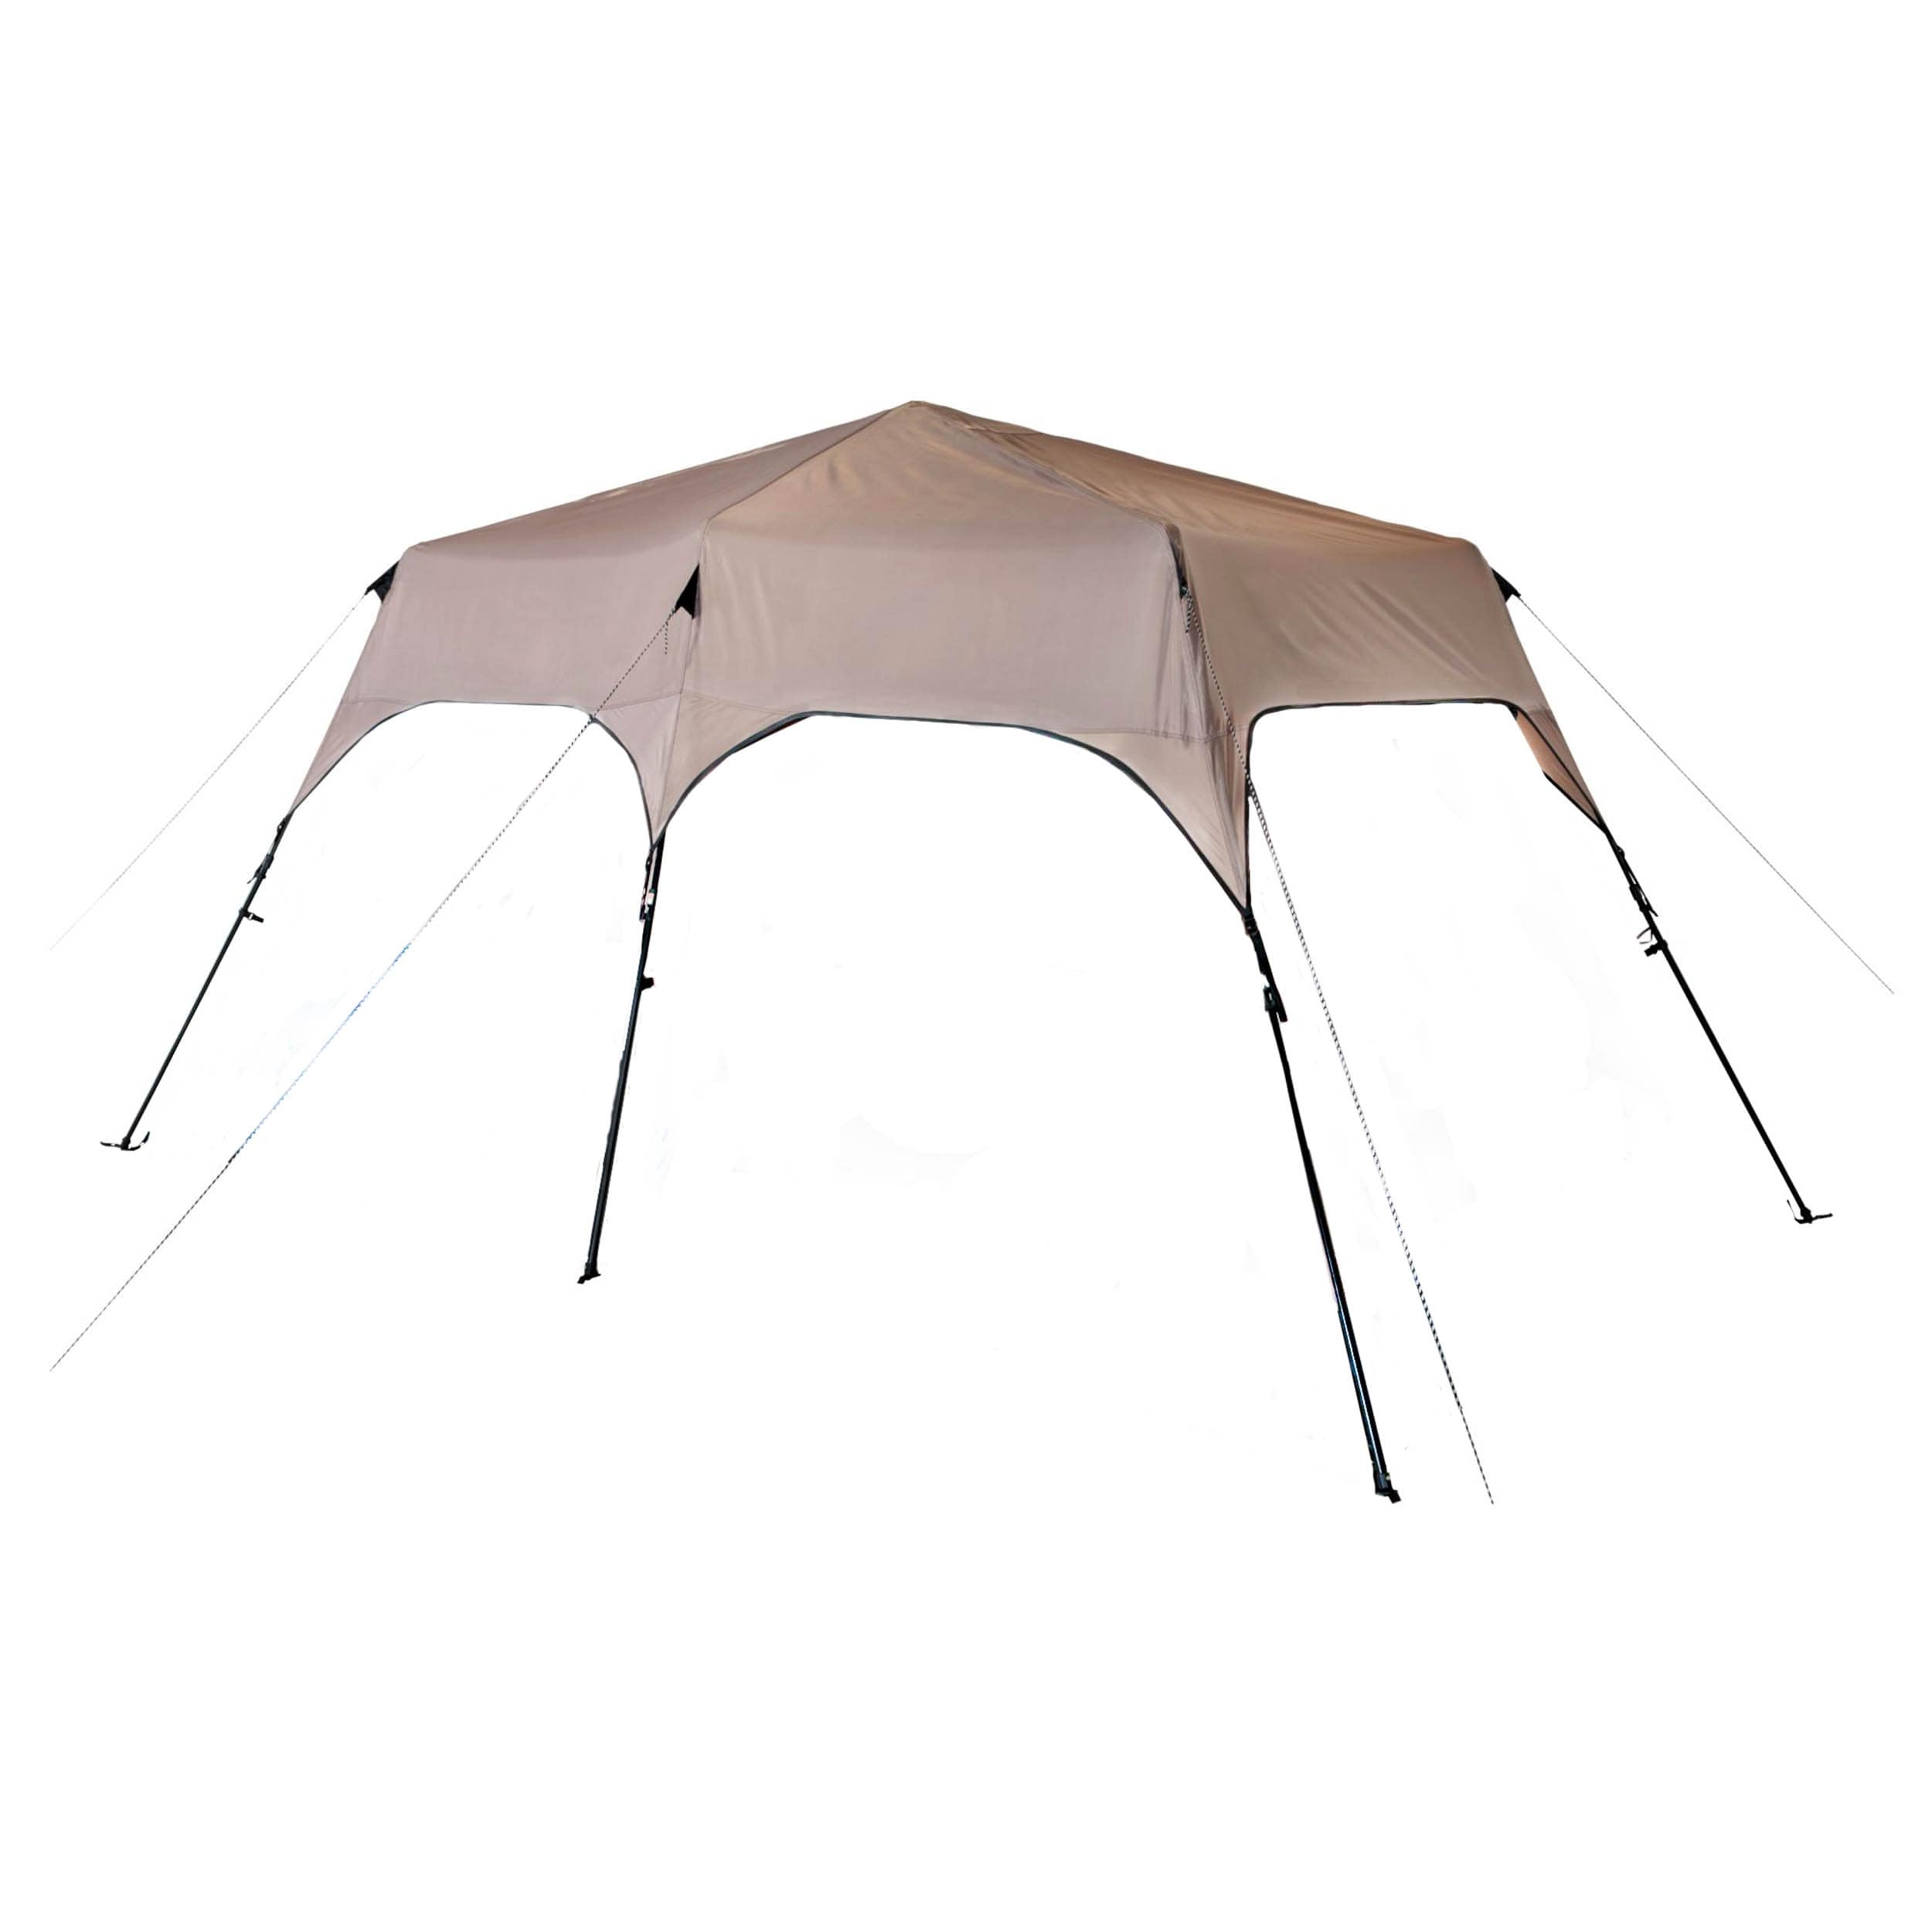 Buy Coleman Tents Outdoor Canopies Online At Overstockcom Our